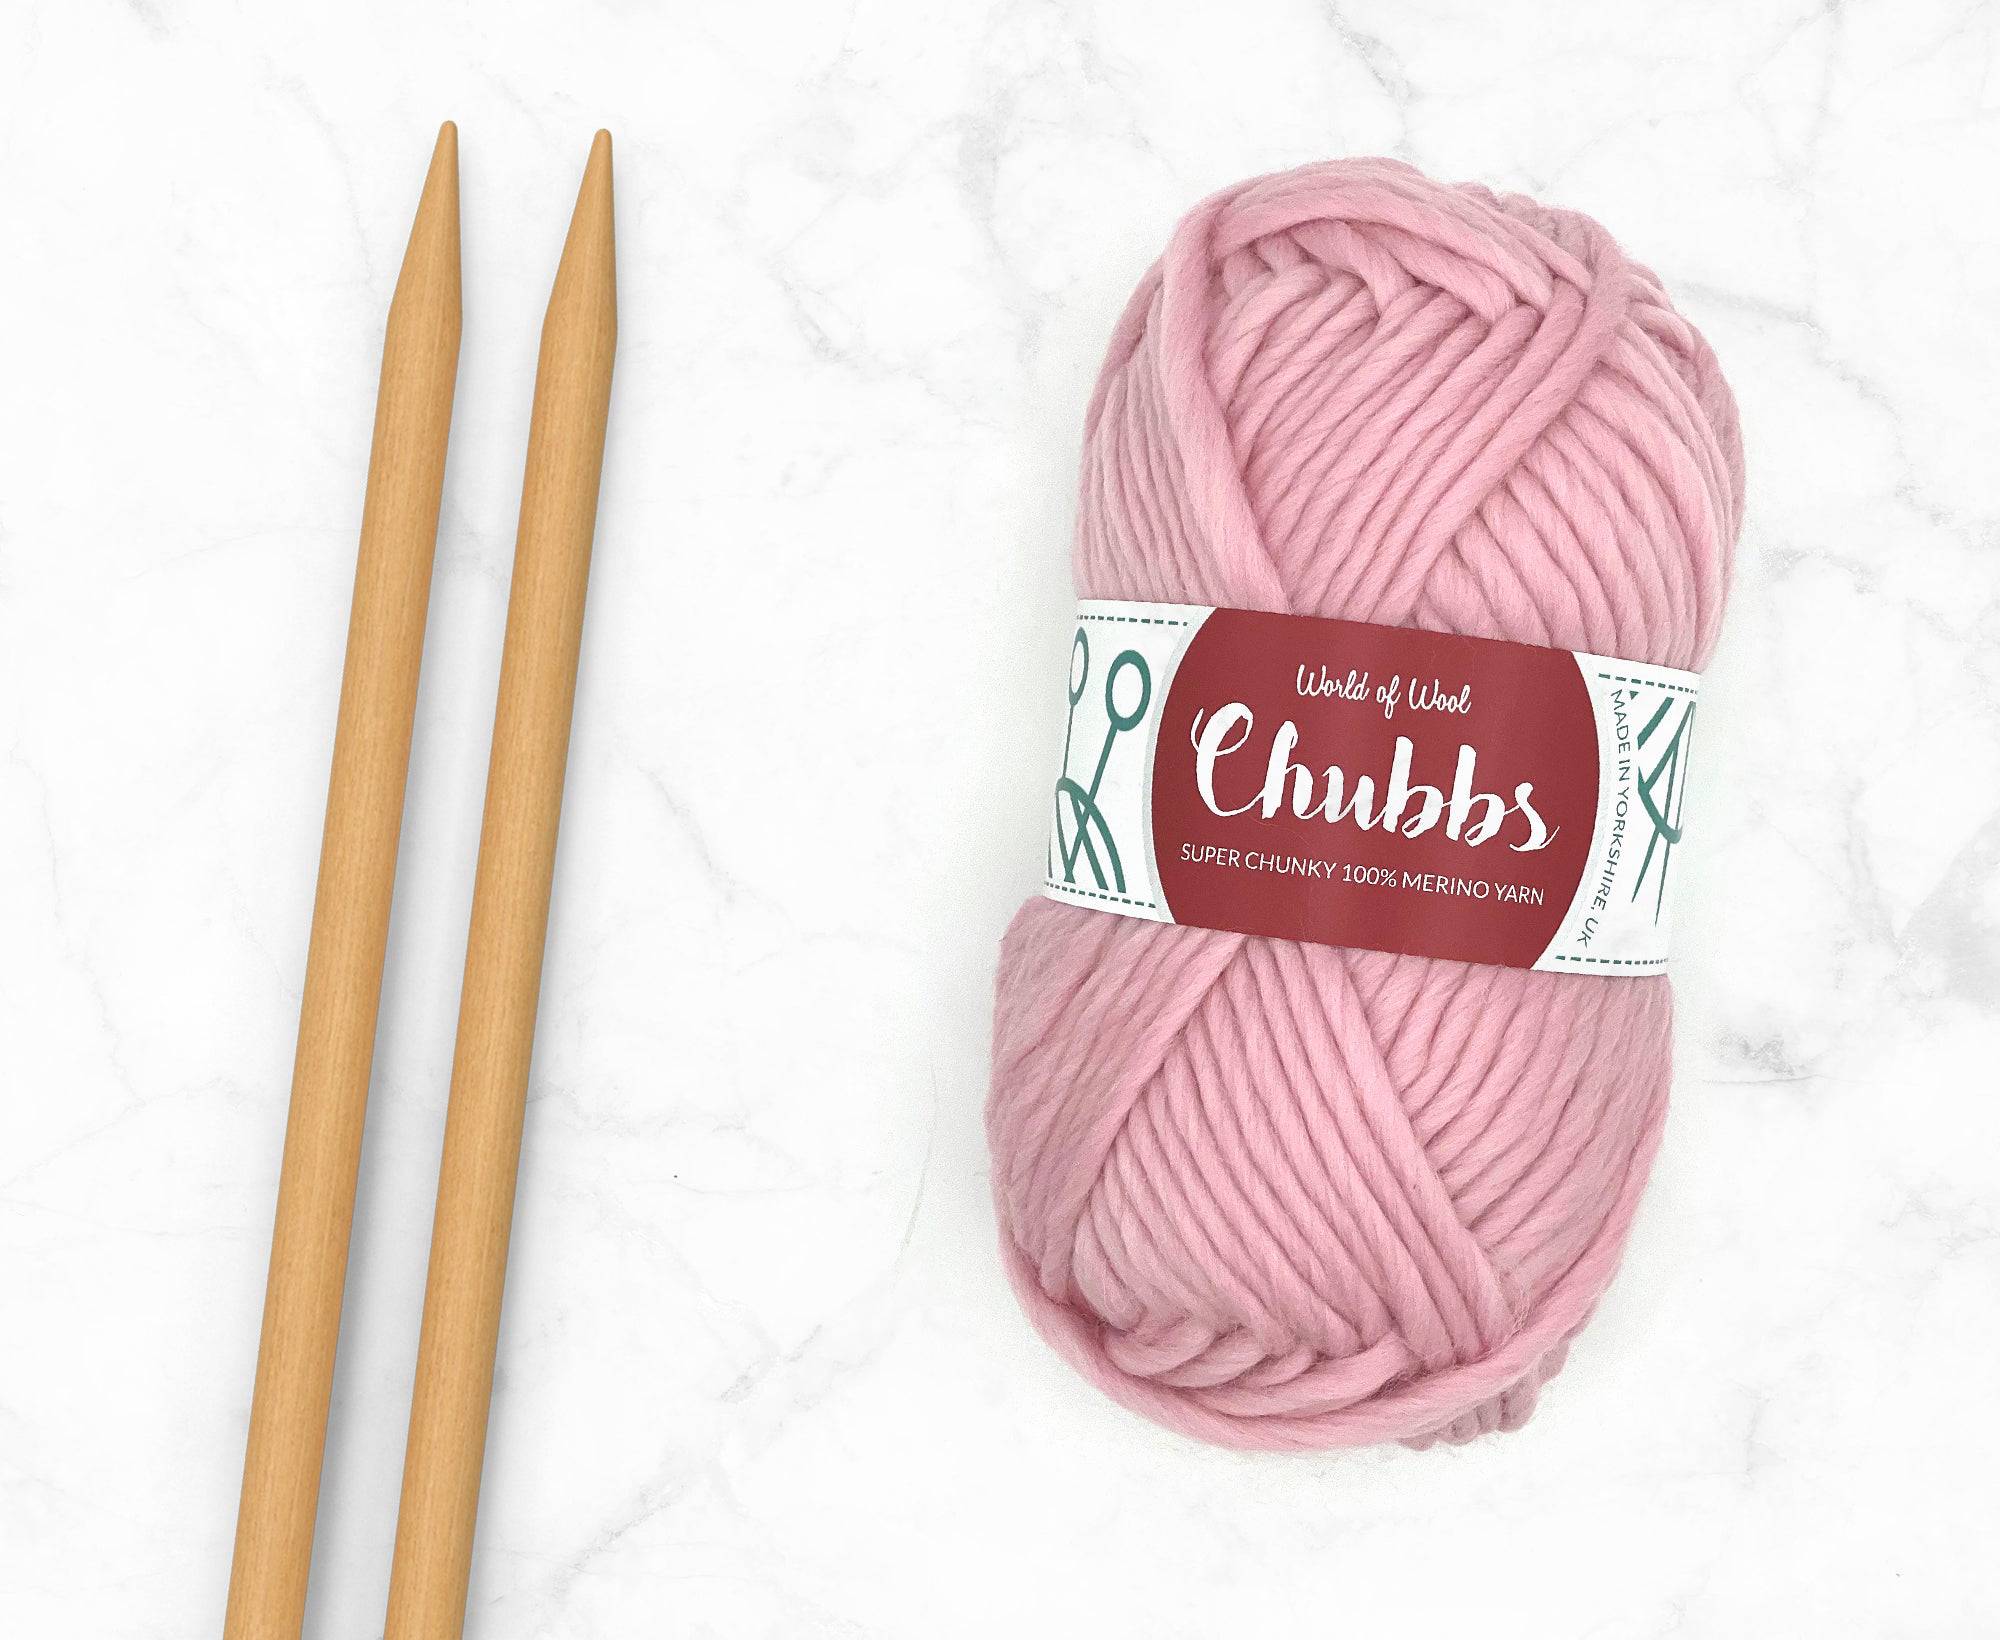 Wool yarn,100% natural, knitting - crochet - craft supplies, light pink